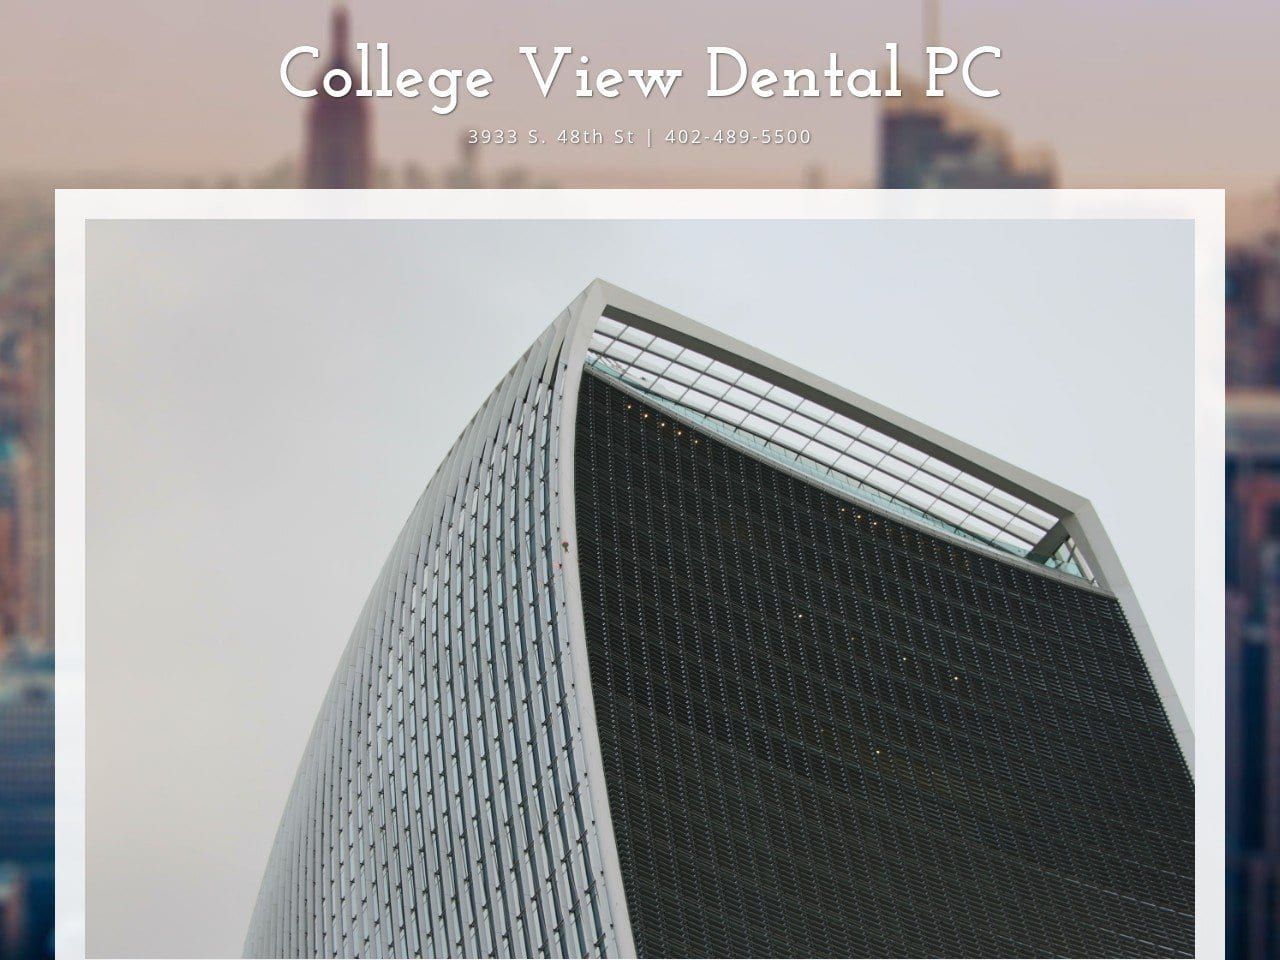 College View Dental Website Screenshot from collegeviewdental.com